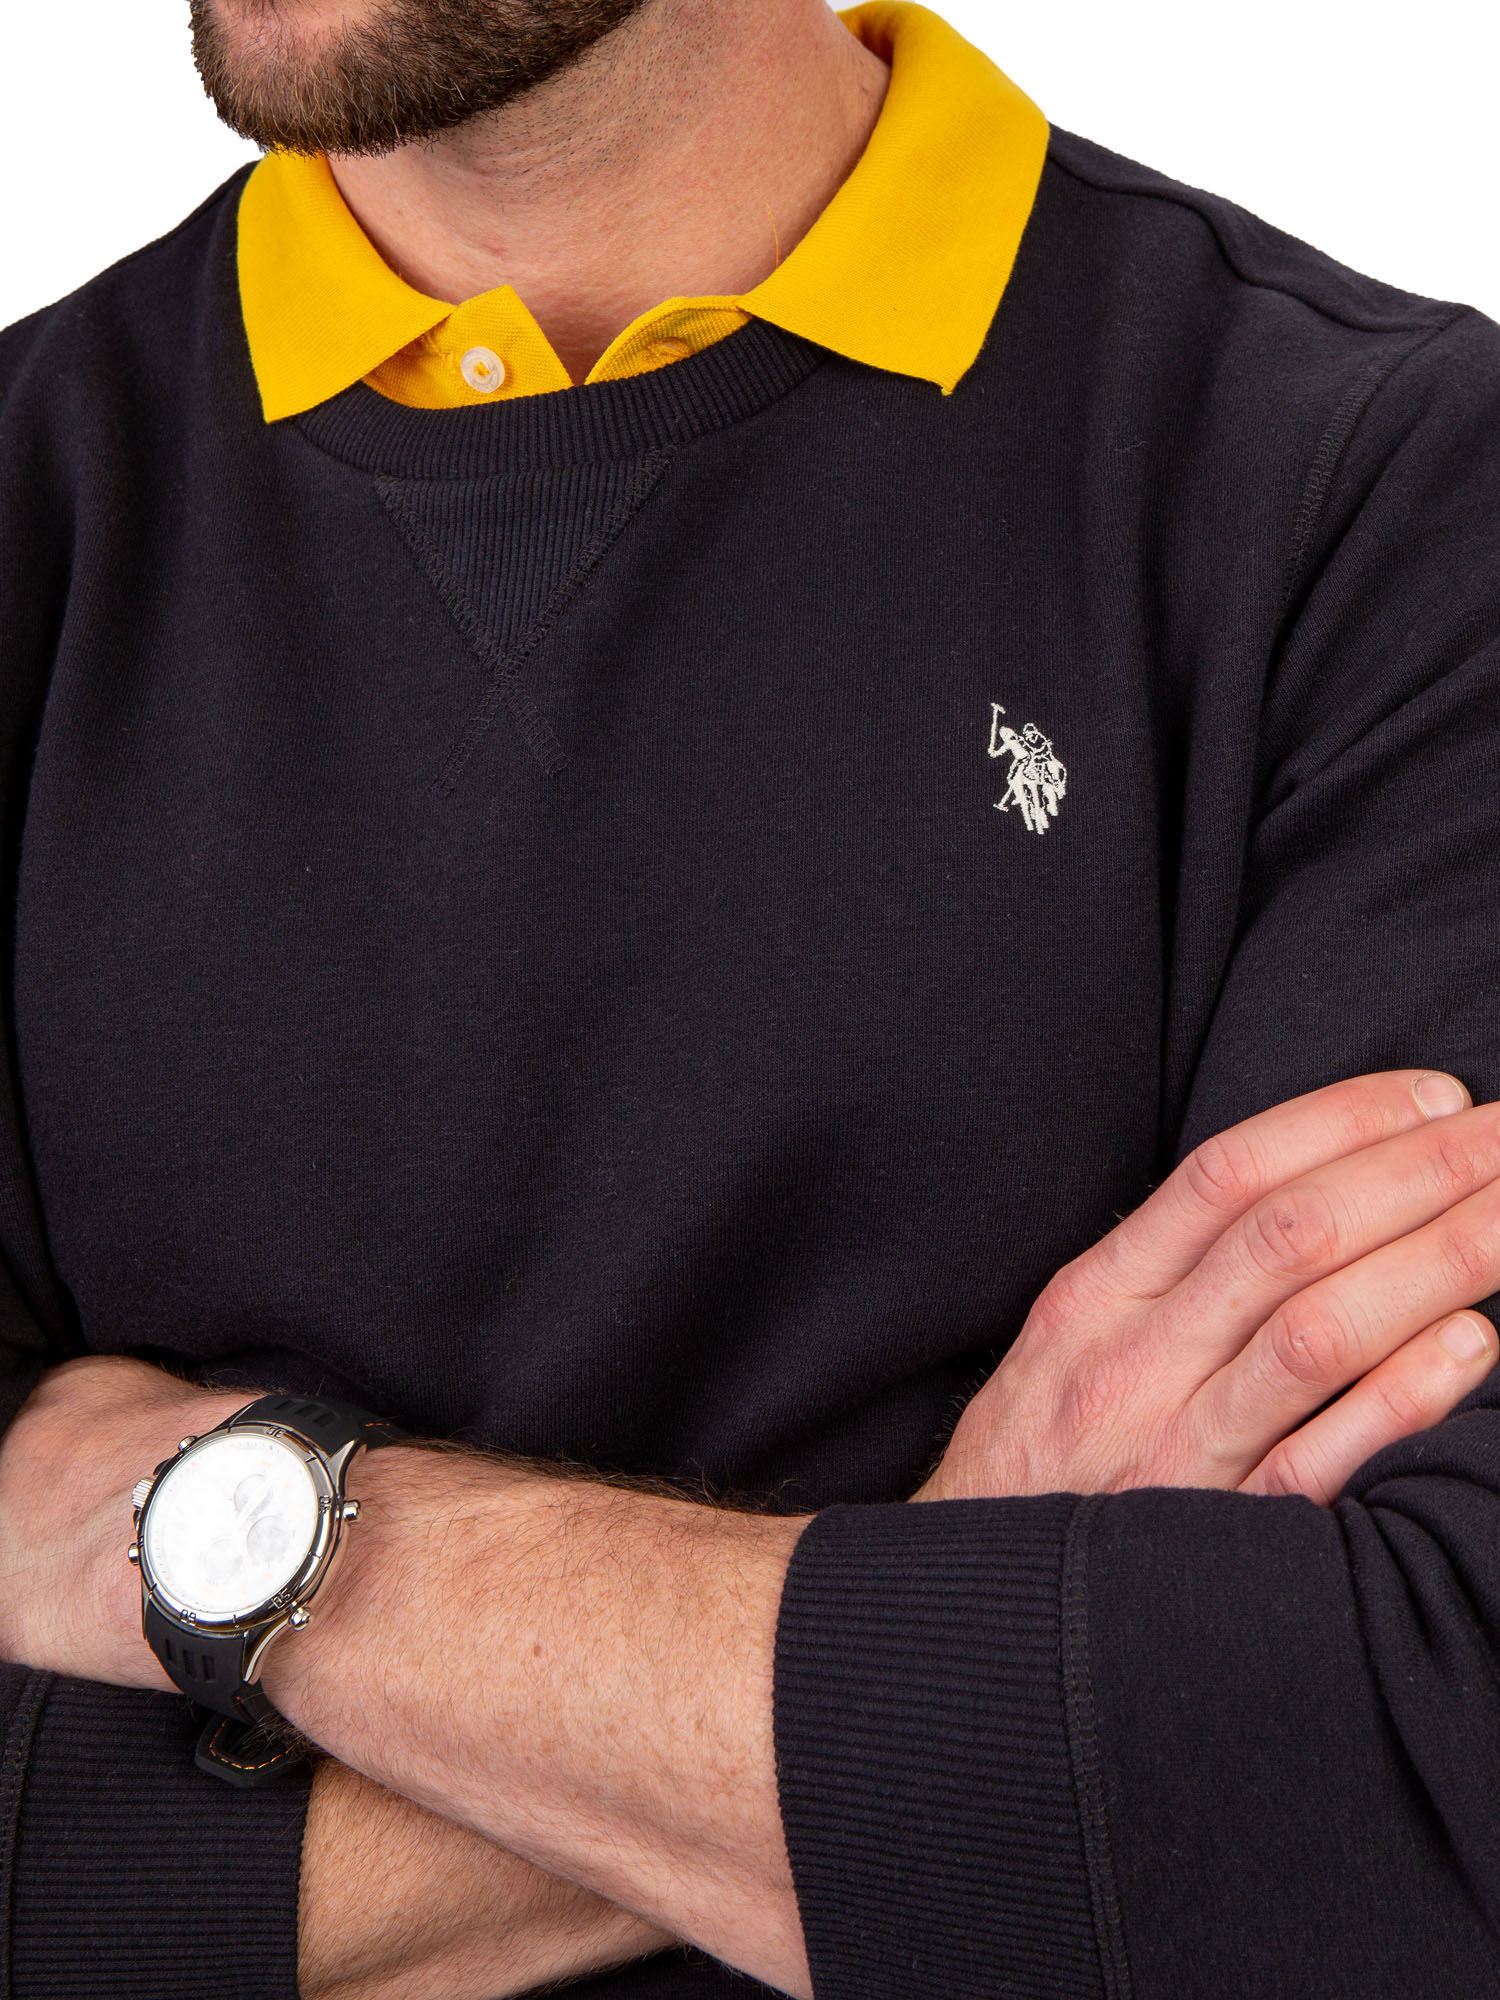 U.S. Polo Assn. Men's Knit Sweater Shirt - image 5 of 5